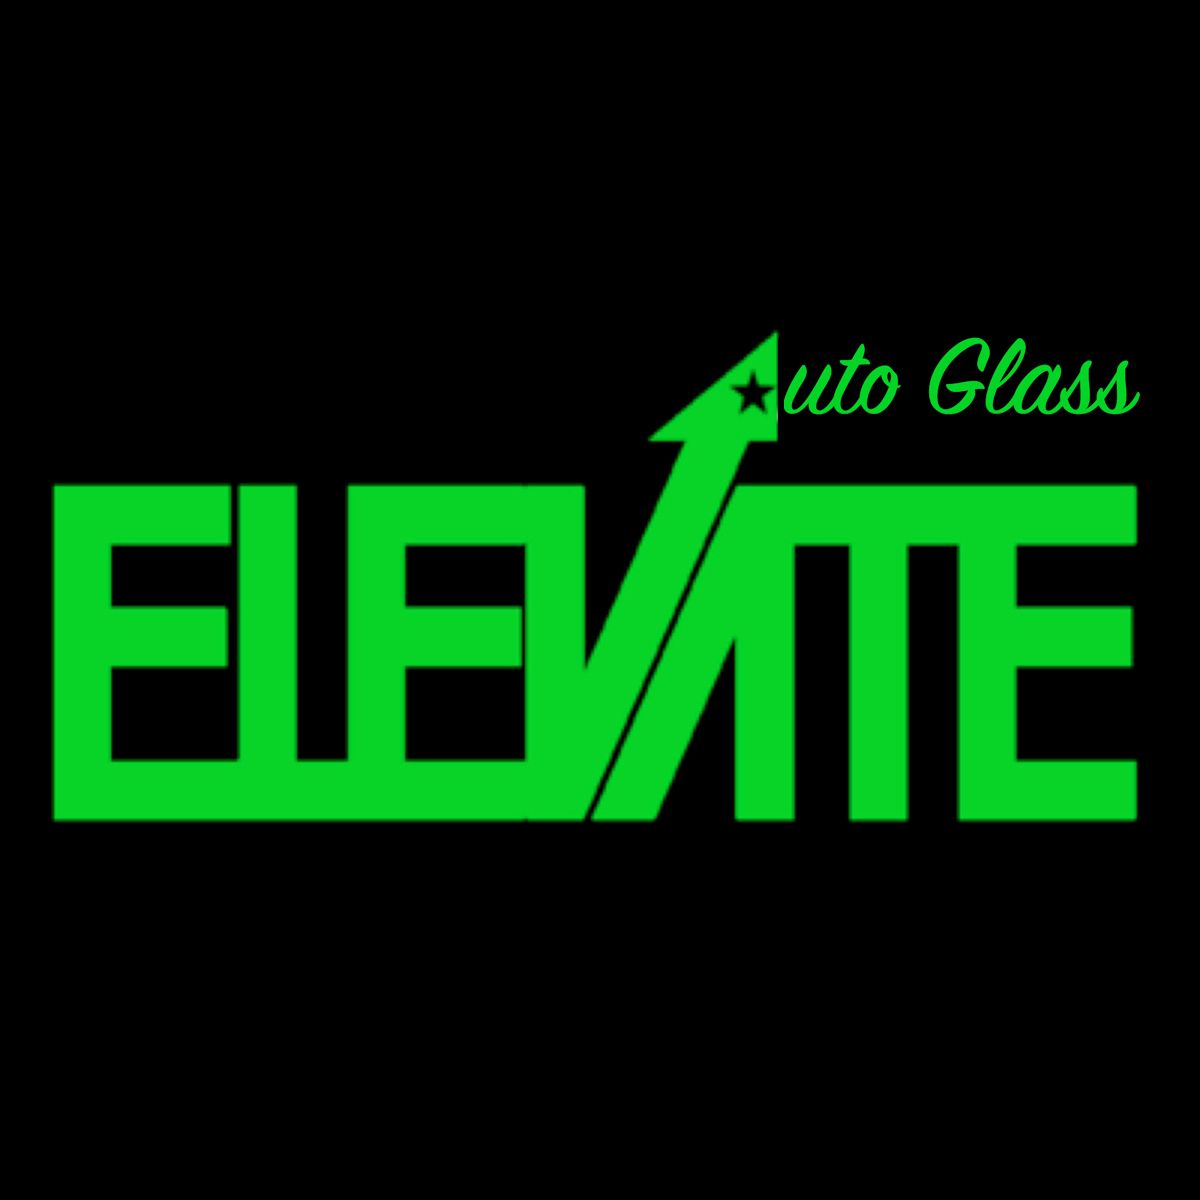 Auto Glass Repair in Martinez, California